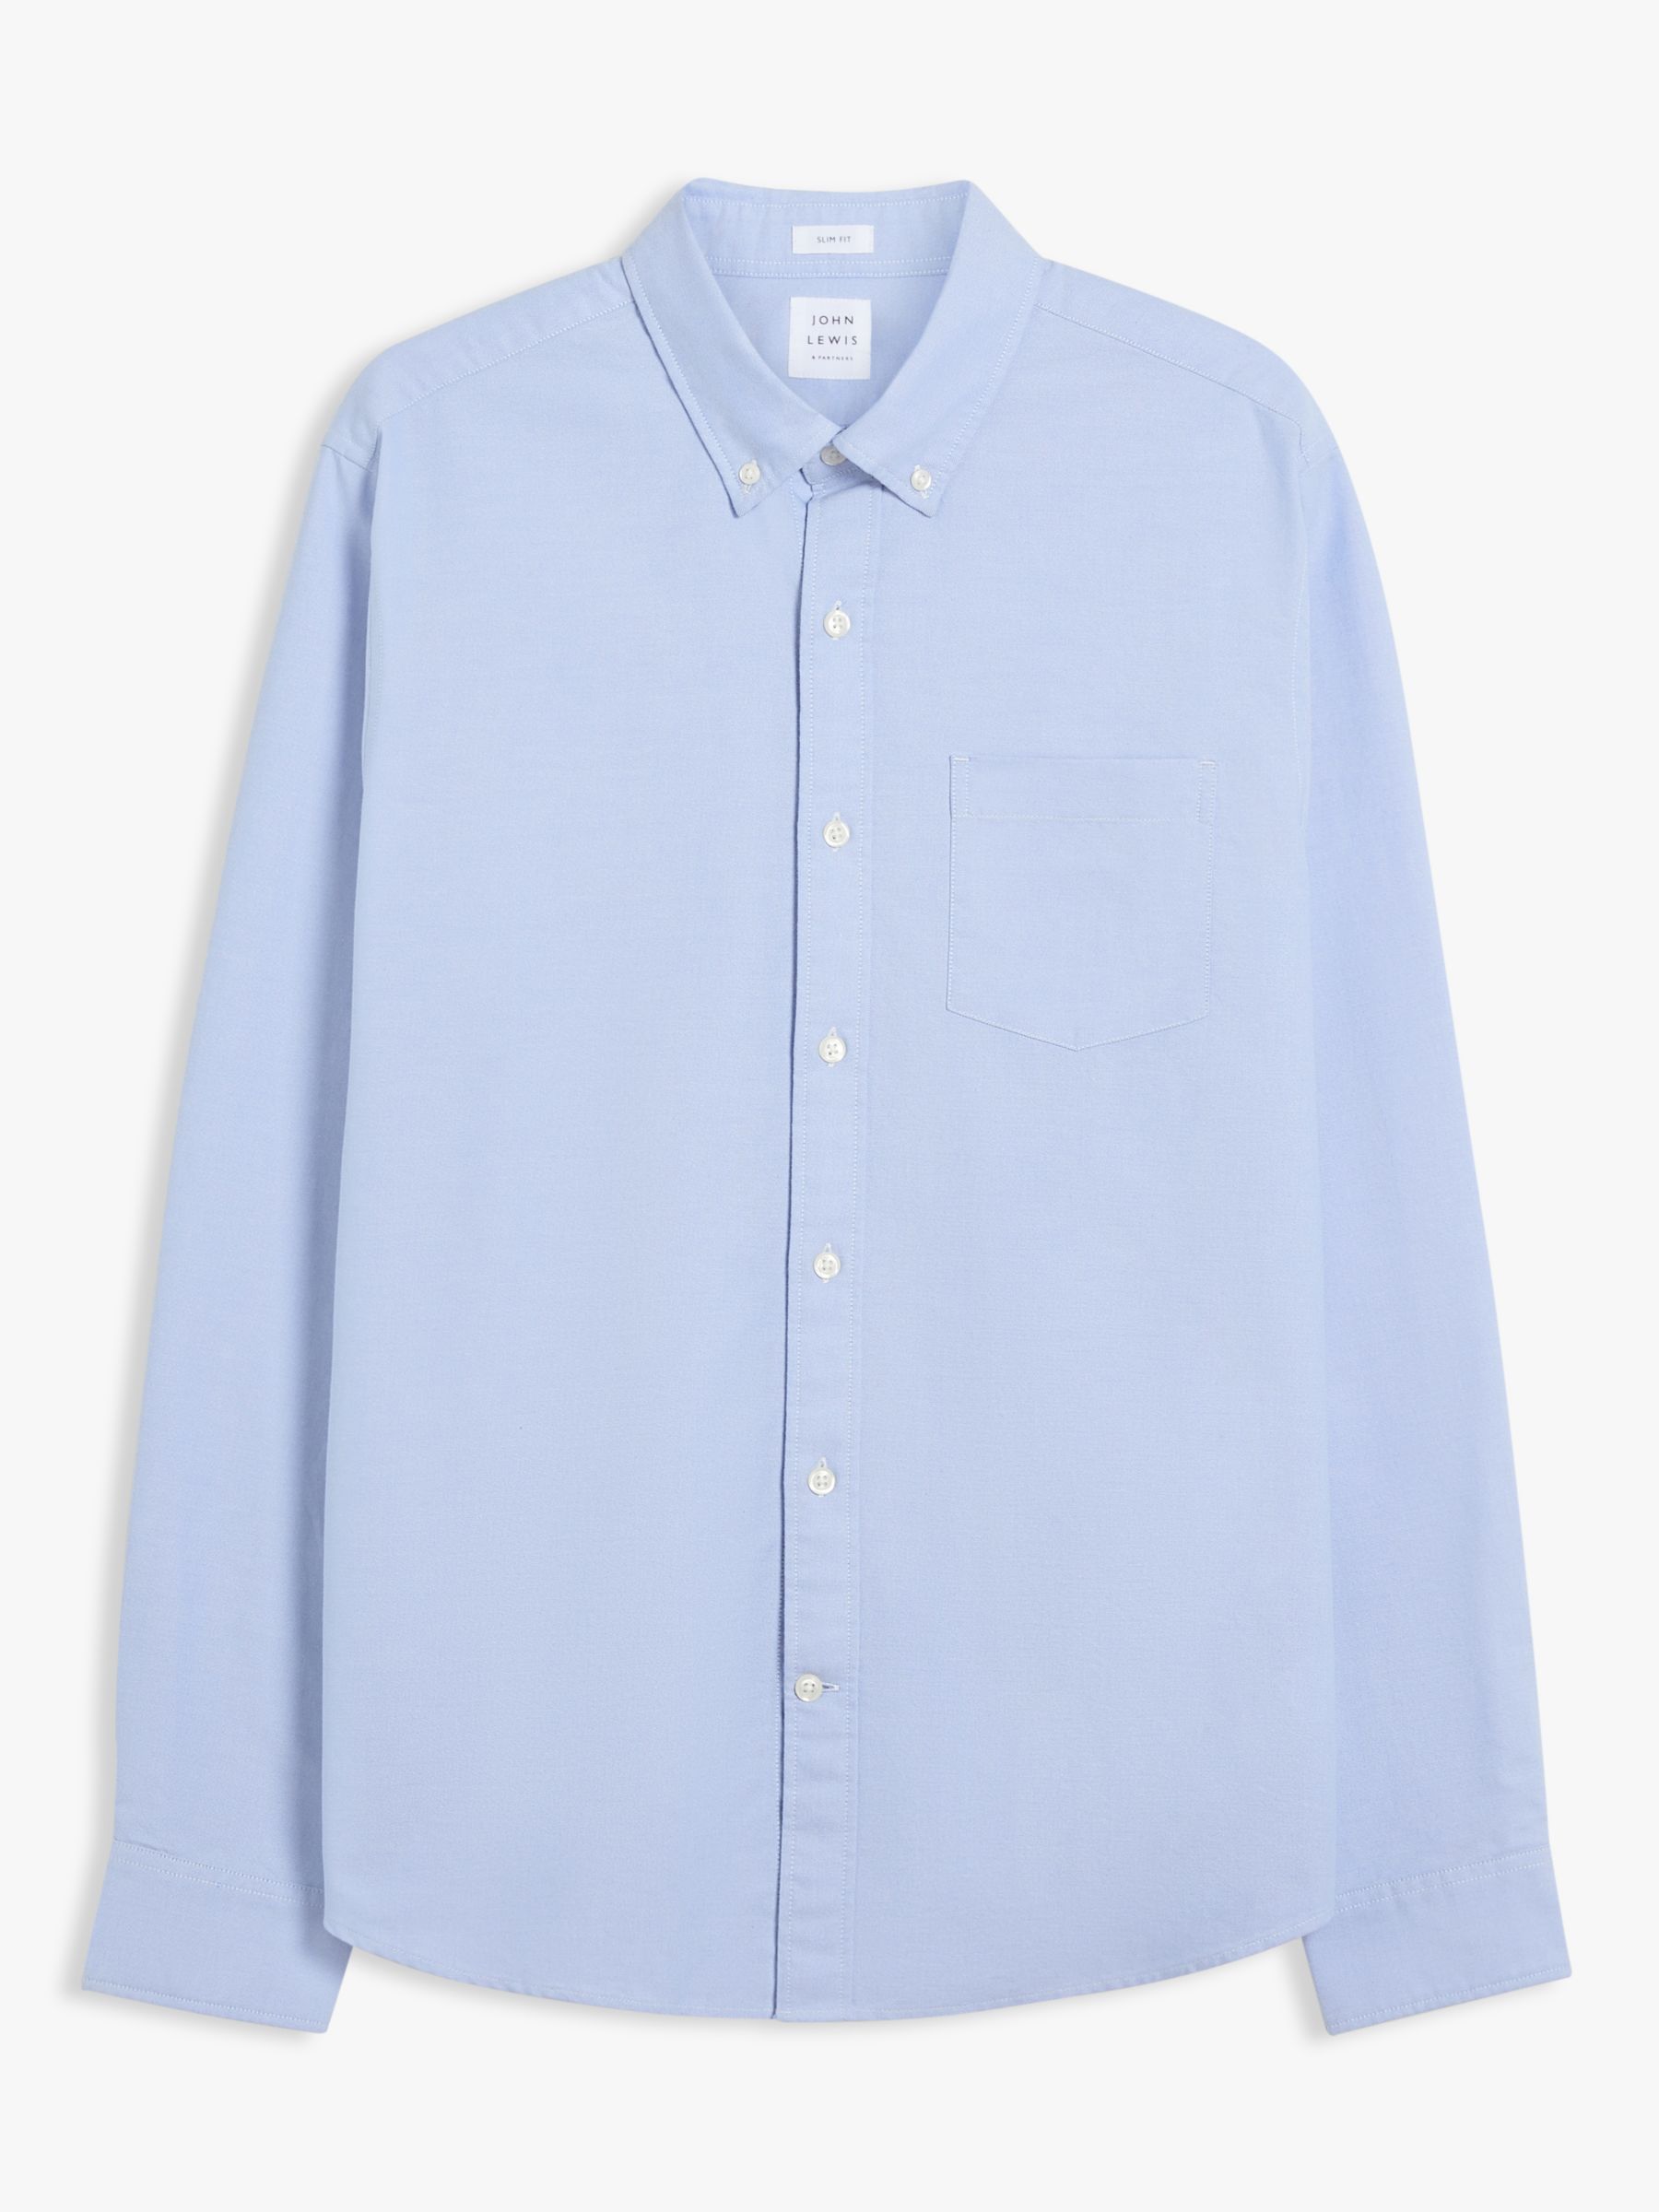 John Lewis Slim Fit Cotton Oxford Button Down Shirt, Blue, S